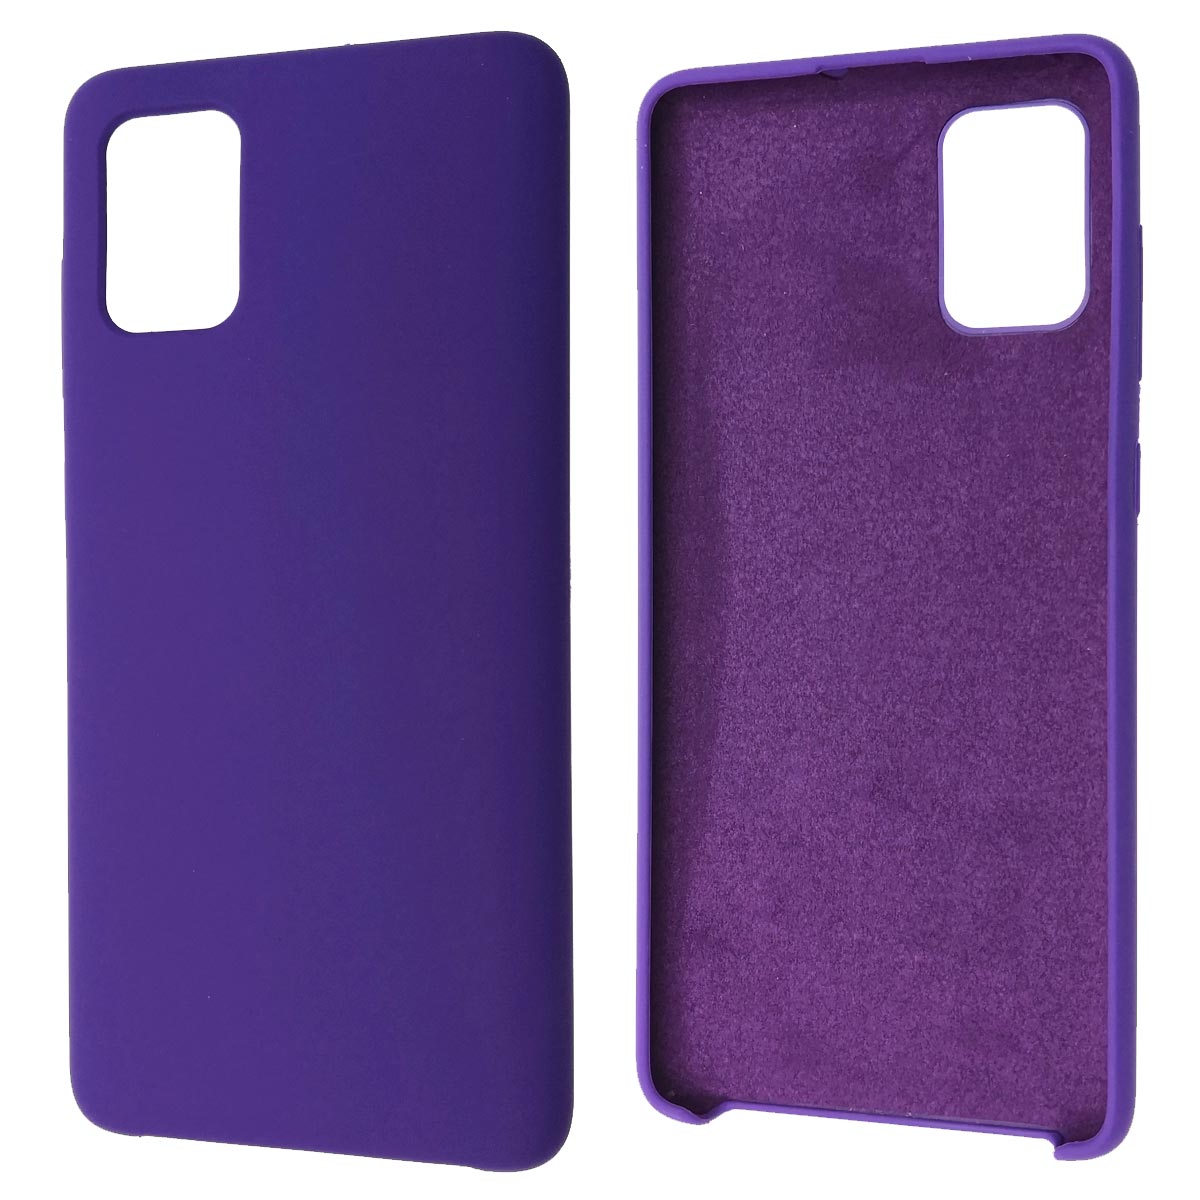 Чехол накладка Silicon Cover для SAMSUNG Galaxy A71 (SM-A715), силикон, бархат, цвет индиго